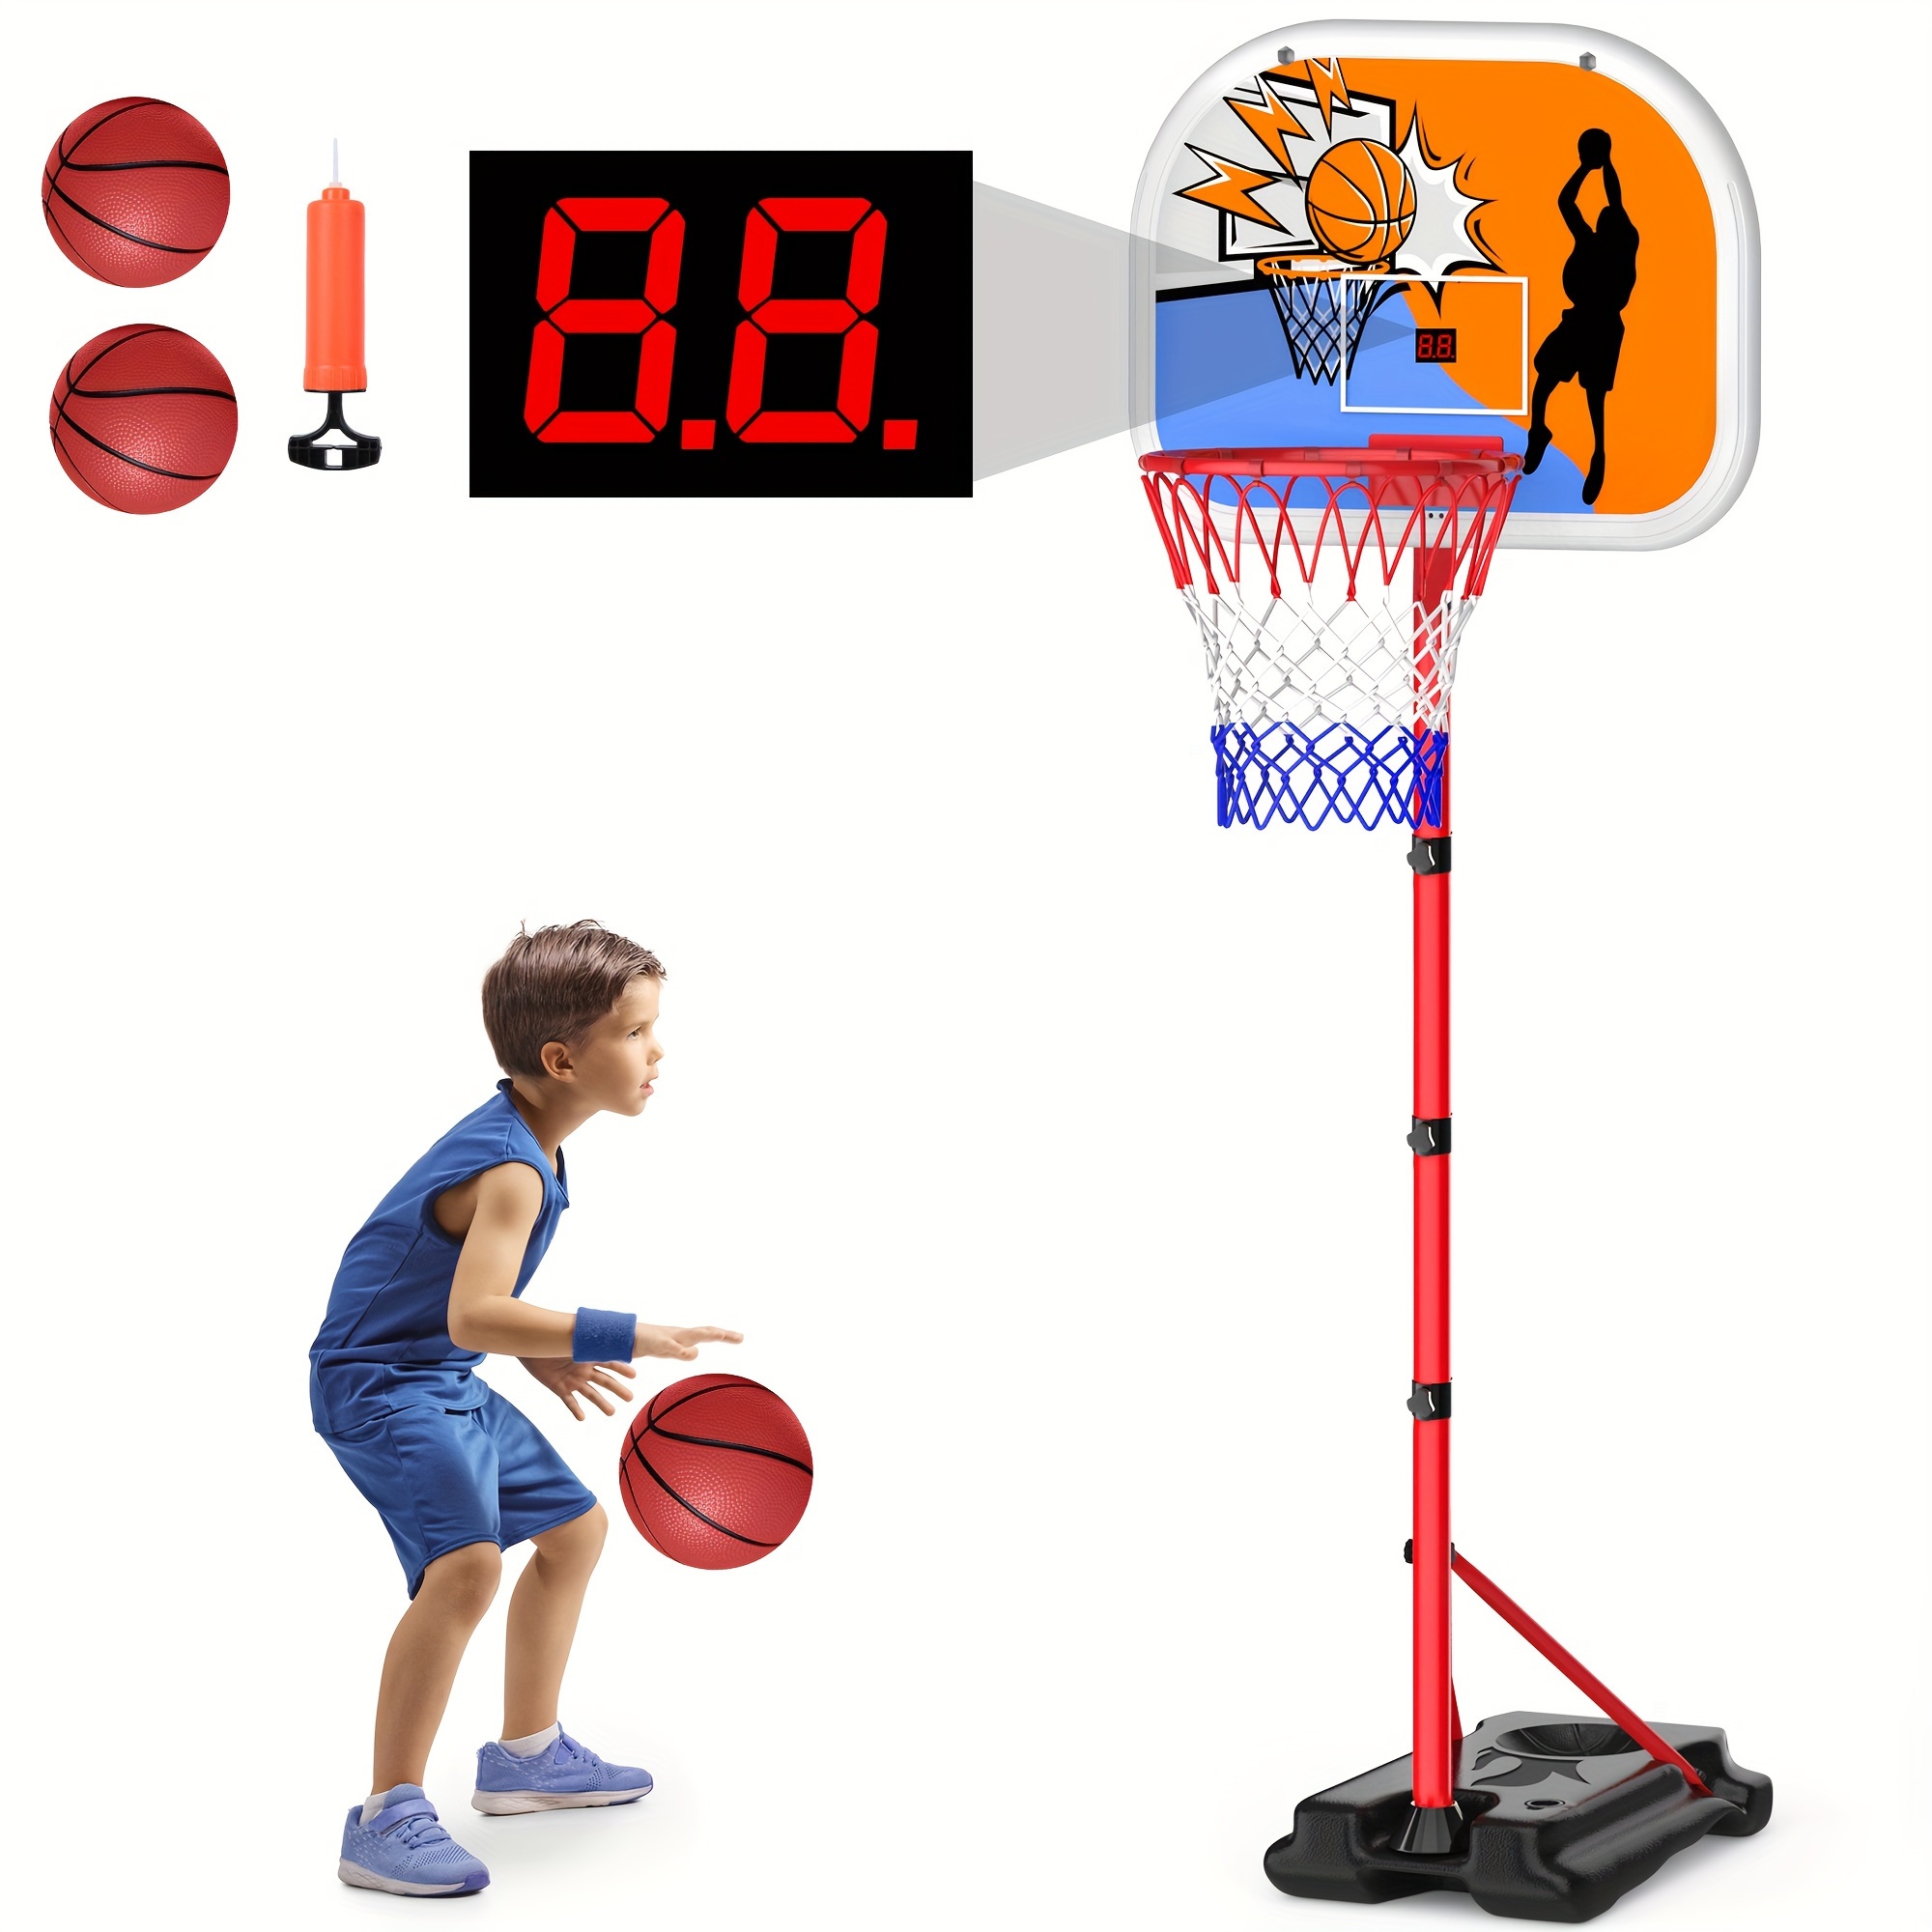 

Kids Basketball Hoop With Electronic Scoreboard Adjustable Height 3.4ft-5.9ft Basketball Goals Toddler Basketball Hoop Indoor Outdoor Outside Backyard Basketball Toys Boys Girls Gift Age 3 4 5 6 7 8